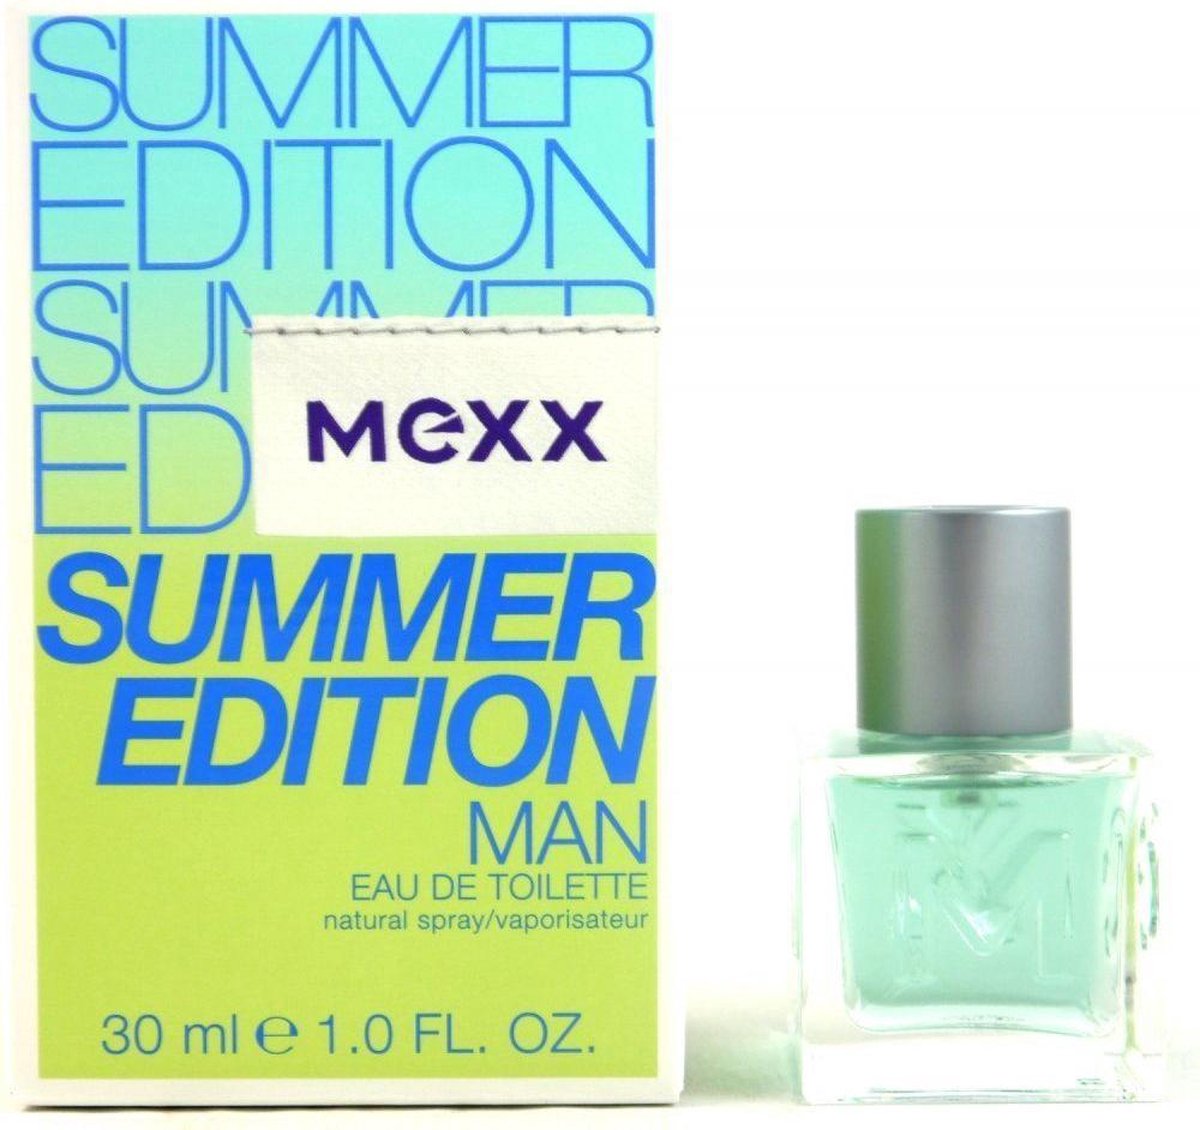 Mexx Summer Edition Man - 30 ml - Eau de Toilette